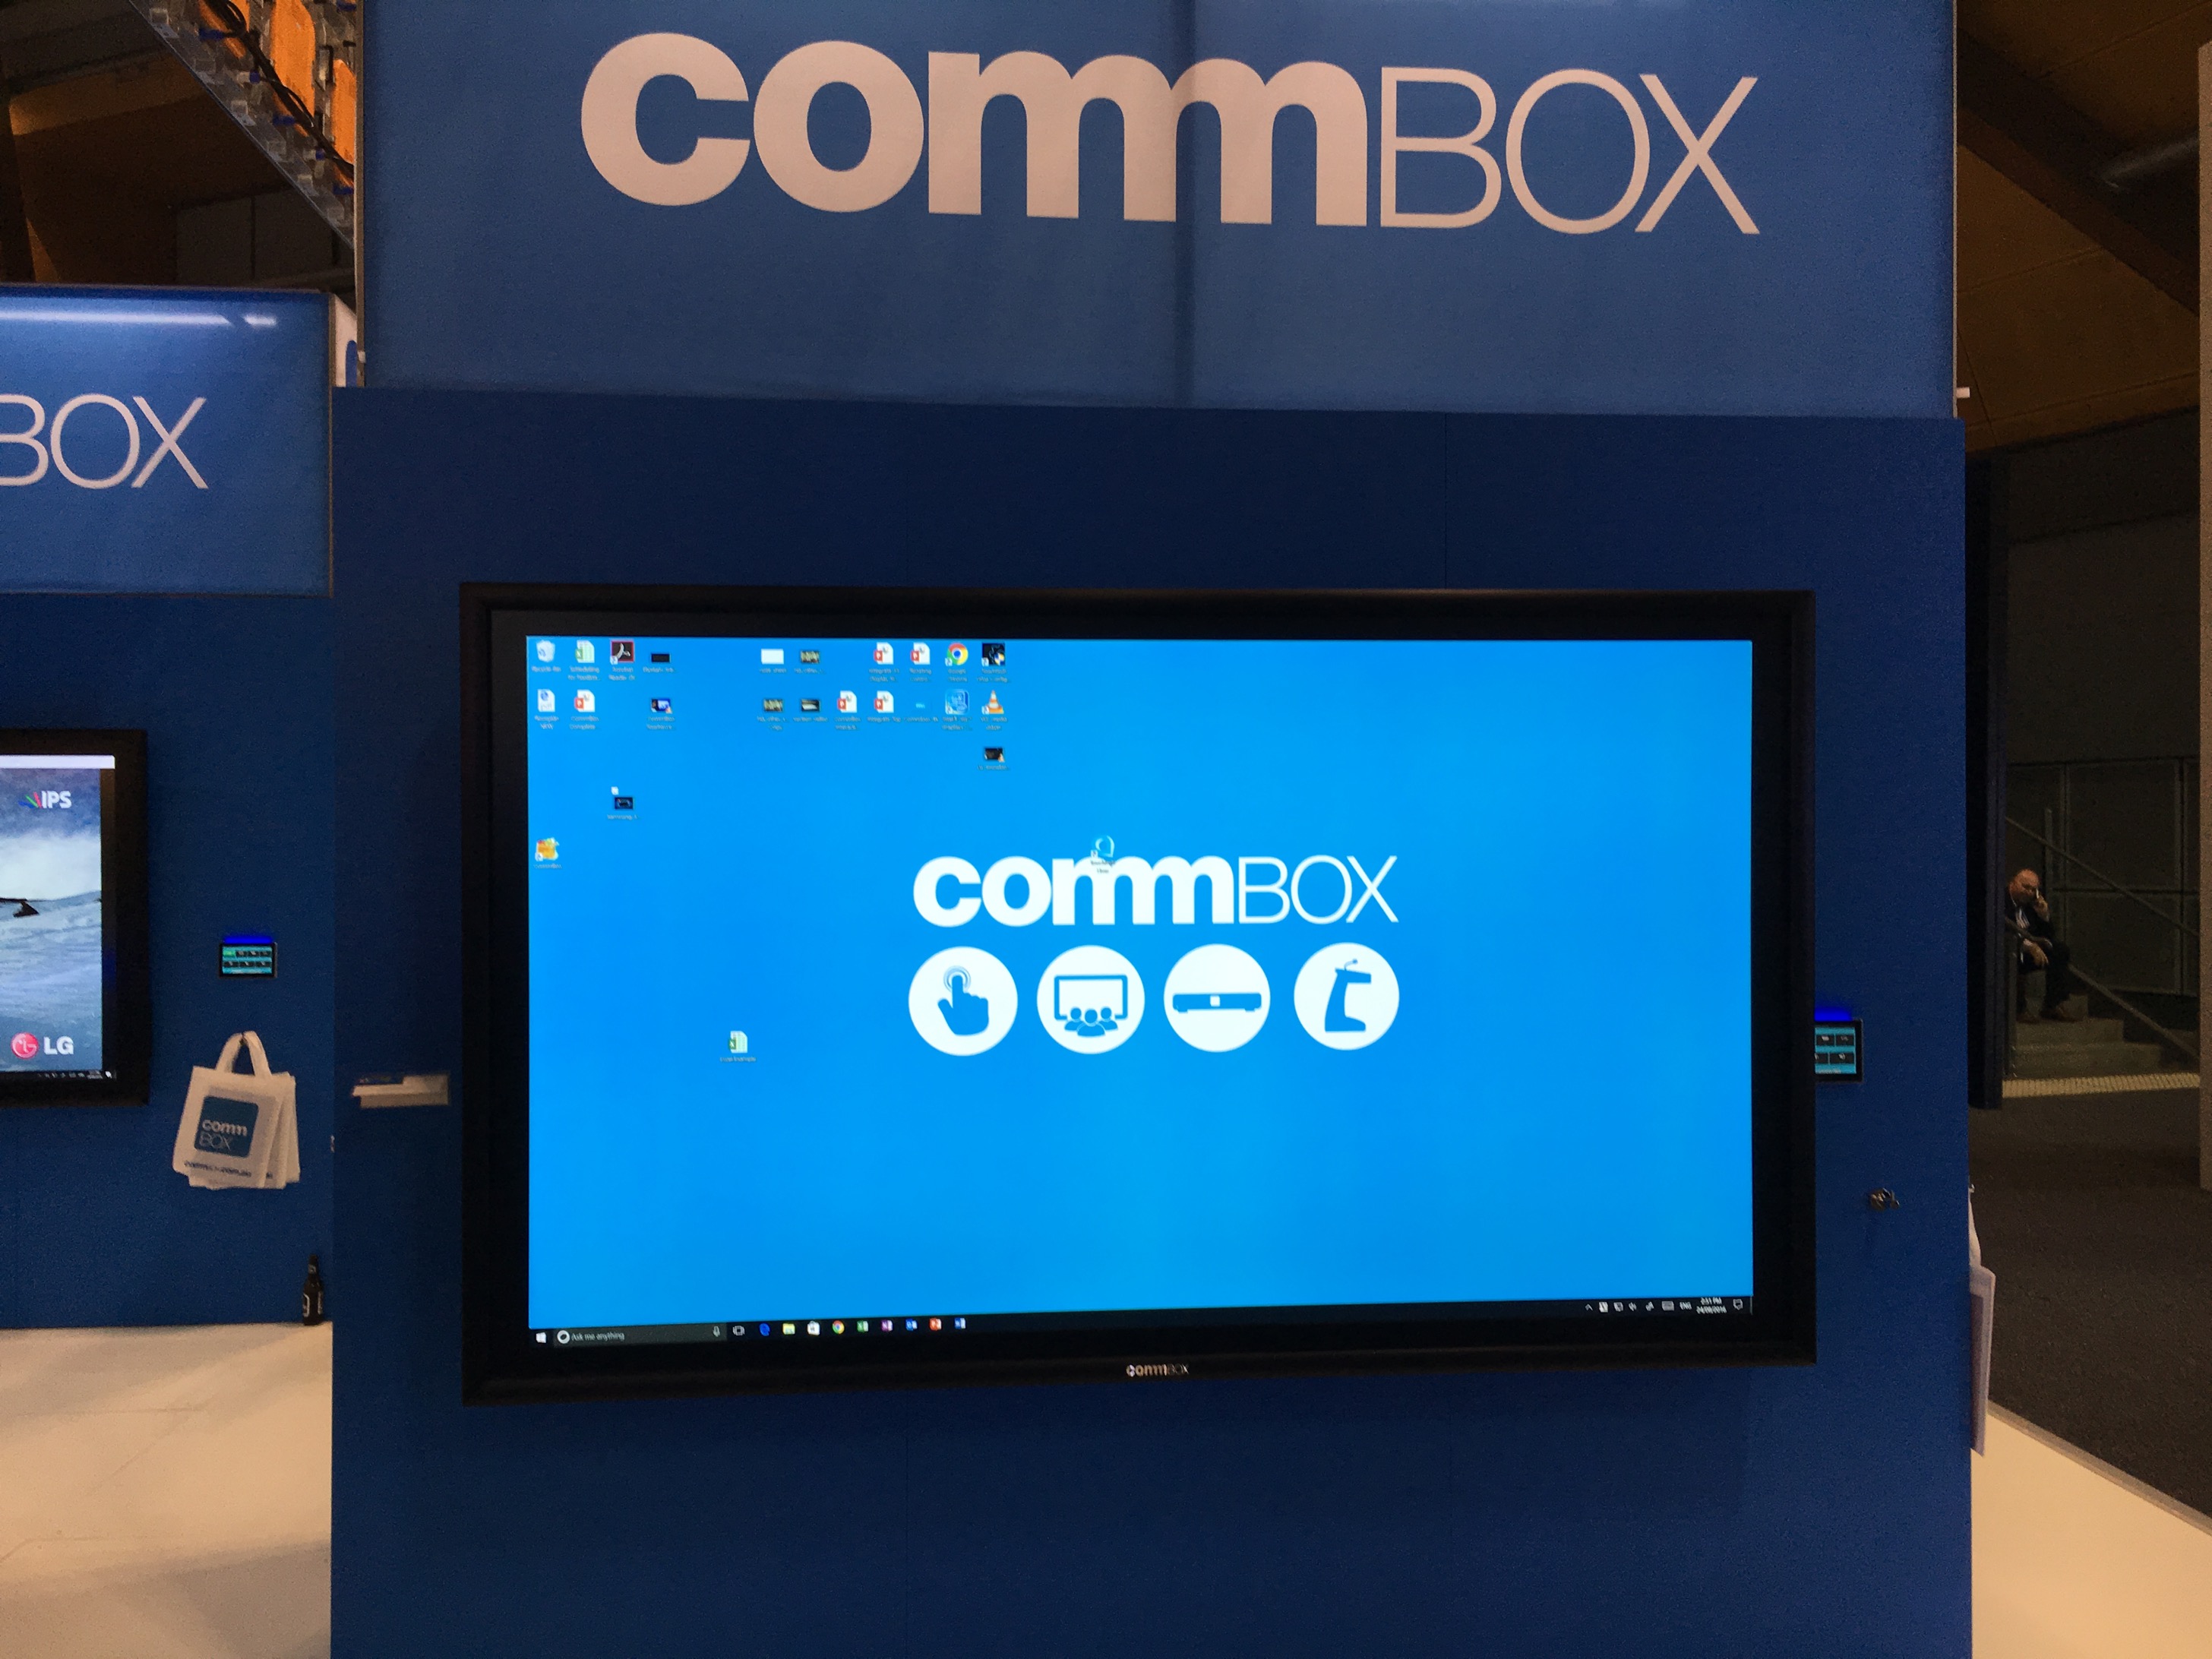 CommBox Classic 103" 4K interactive display